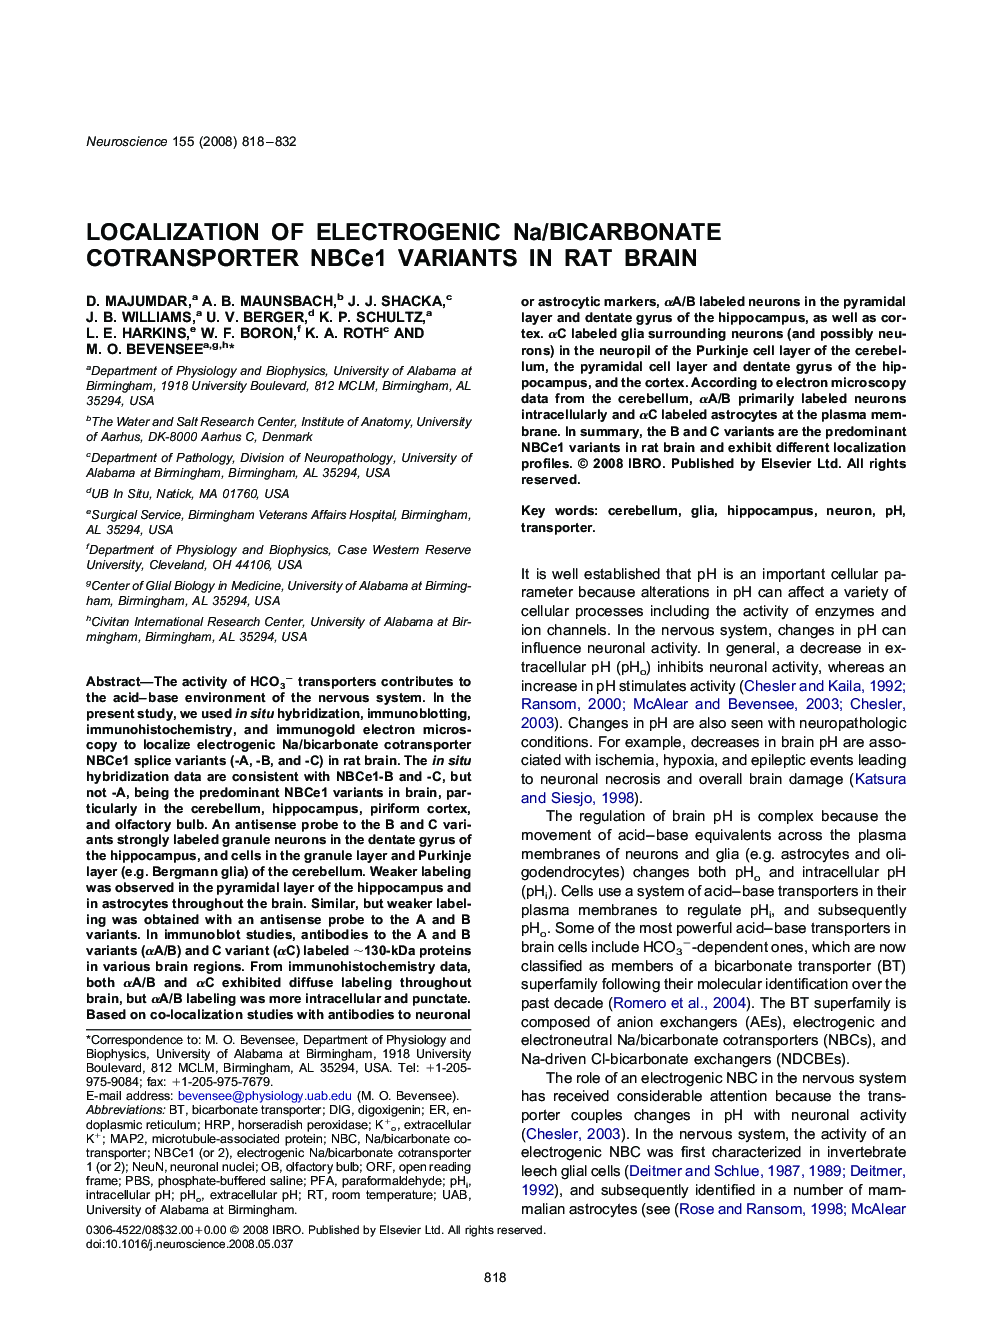 Localization of electrogenic Na/bicarbonate cotransporter NBCe1 variants in rat brain